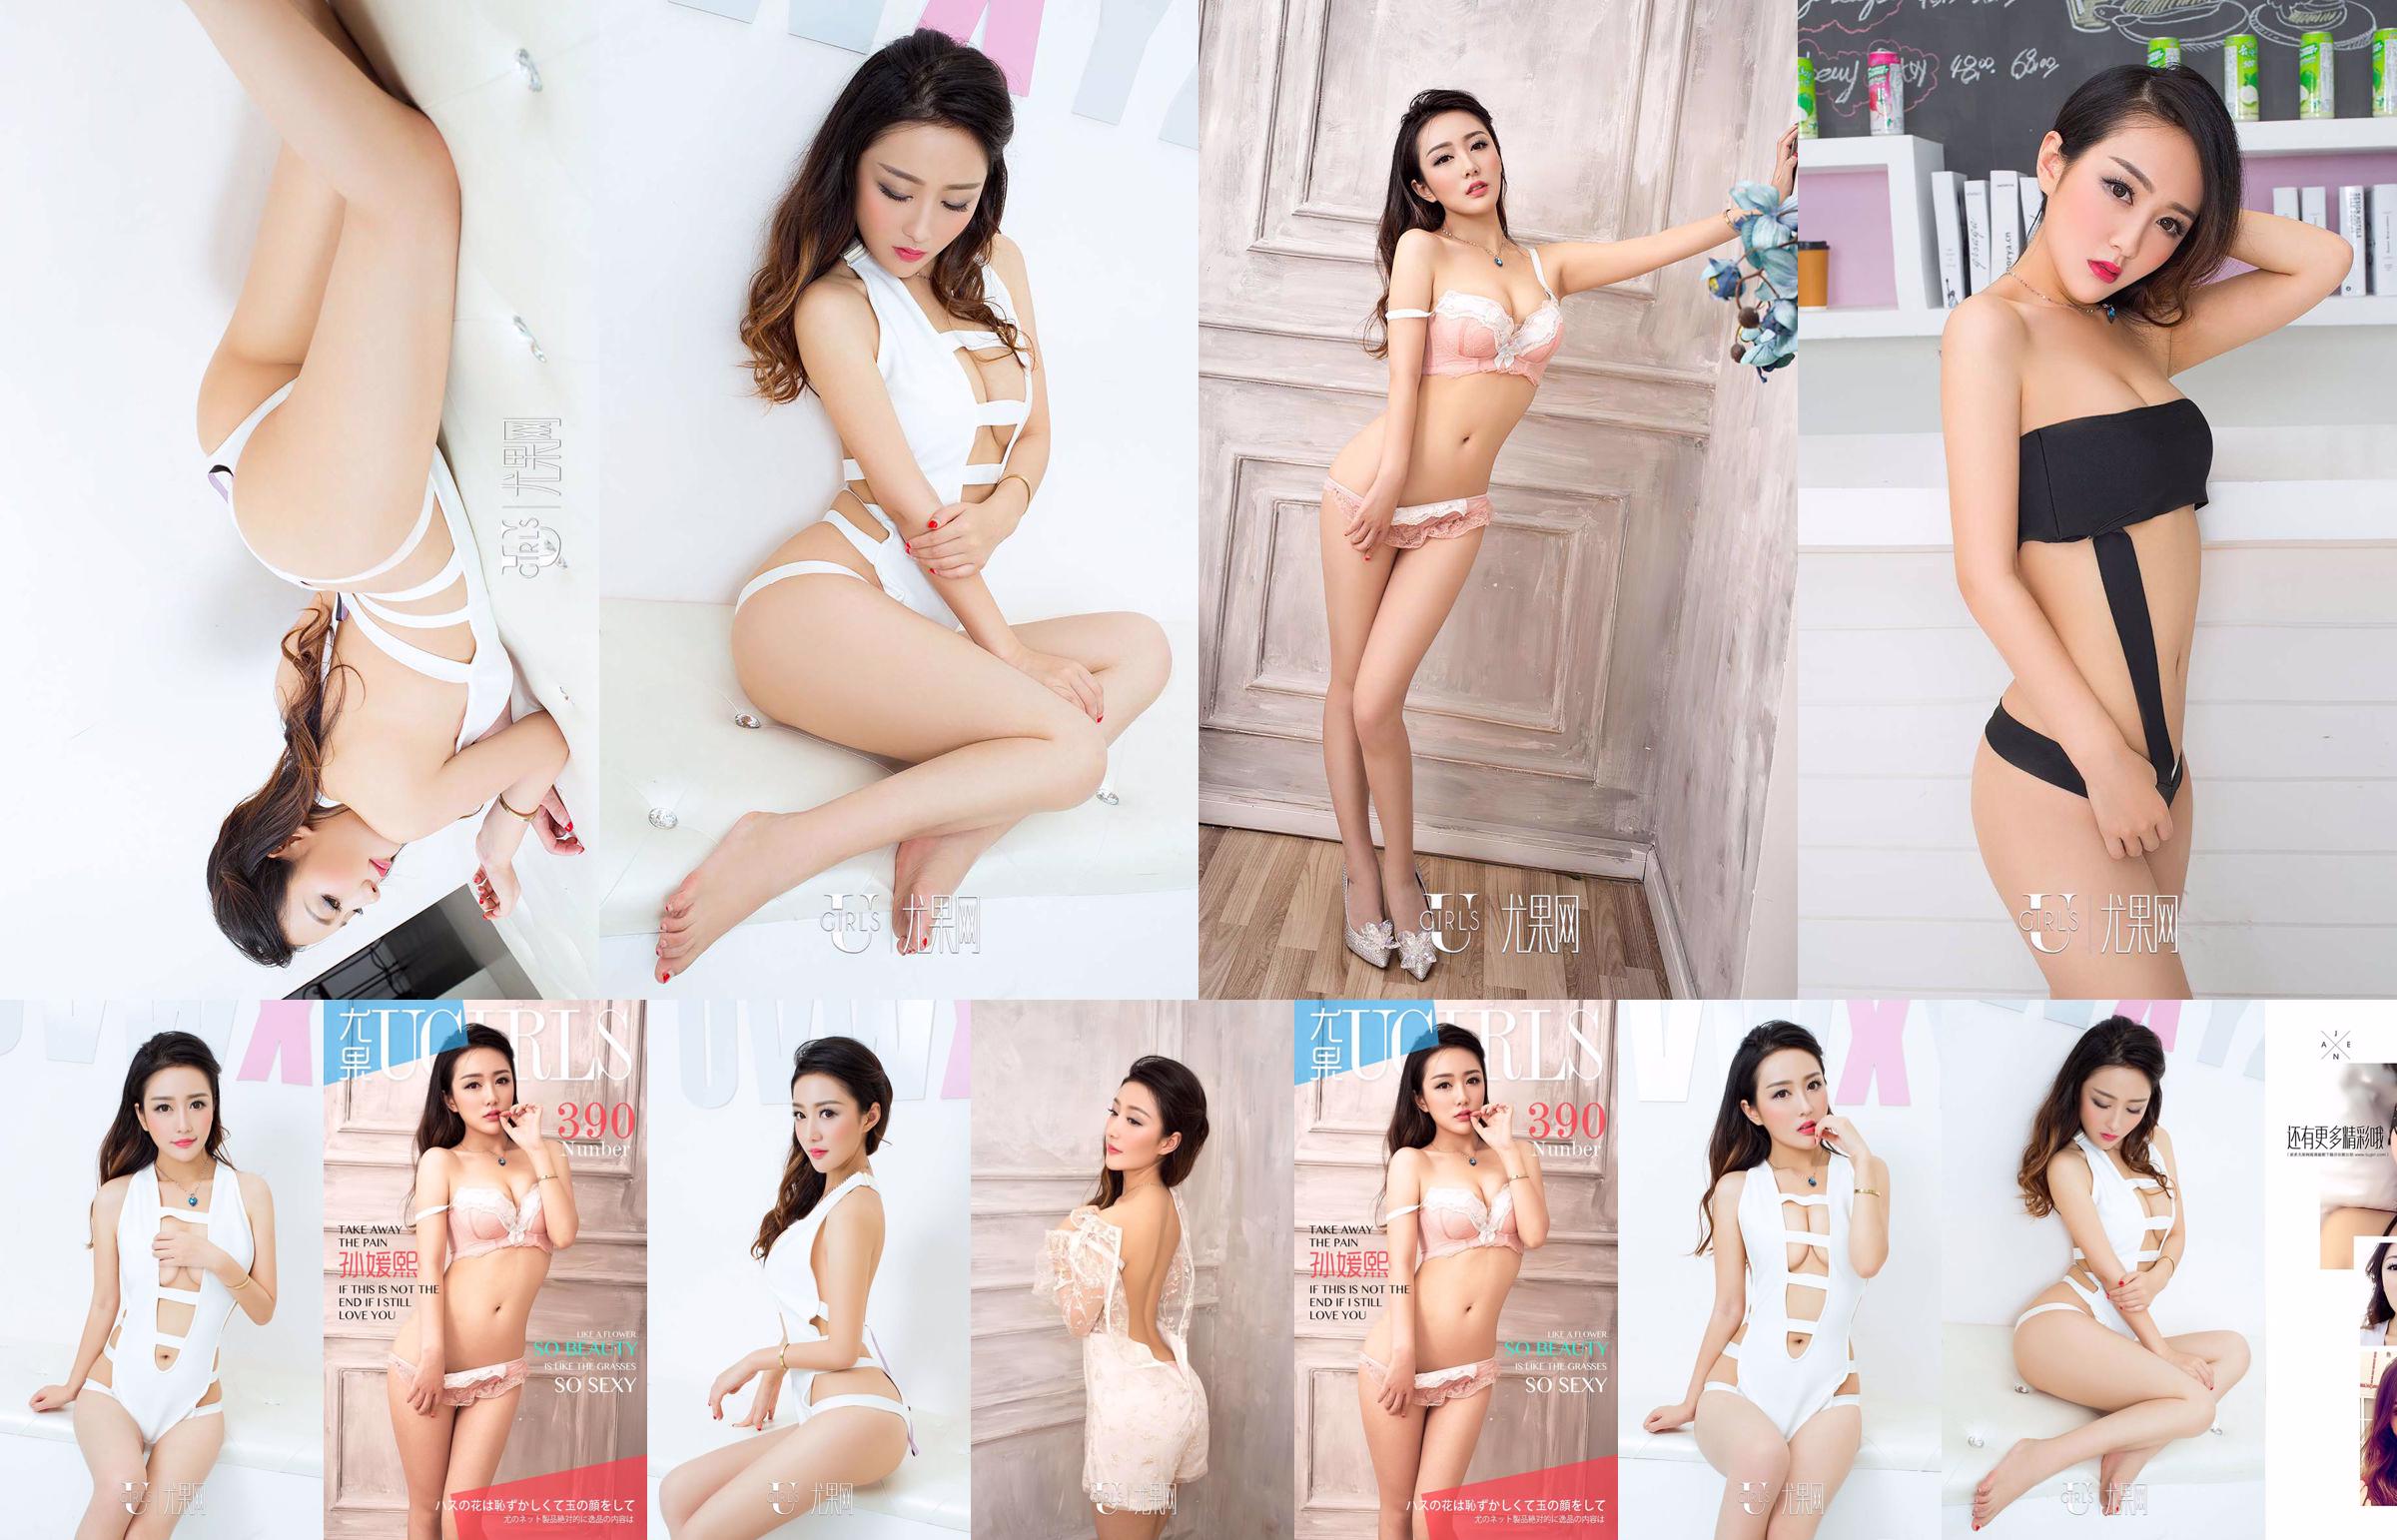 Sun Yuanxi "tão bela tão sexy" [爱 优 物 Ugirls] No.390 No.c04593 Página 4